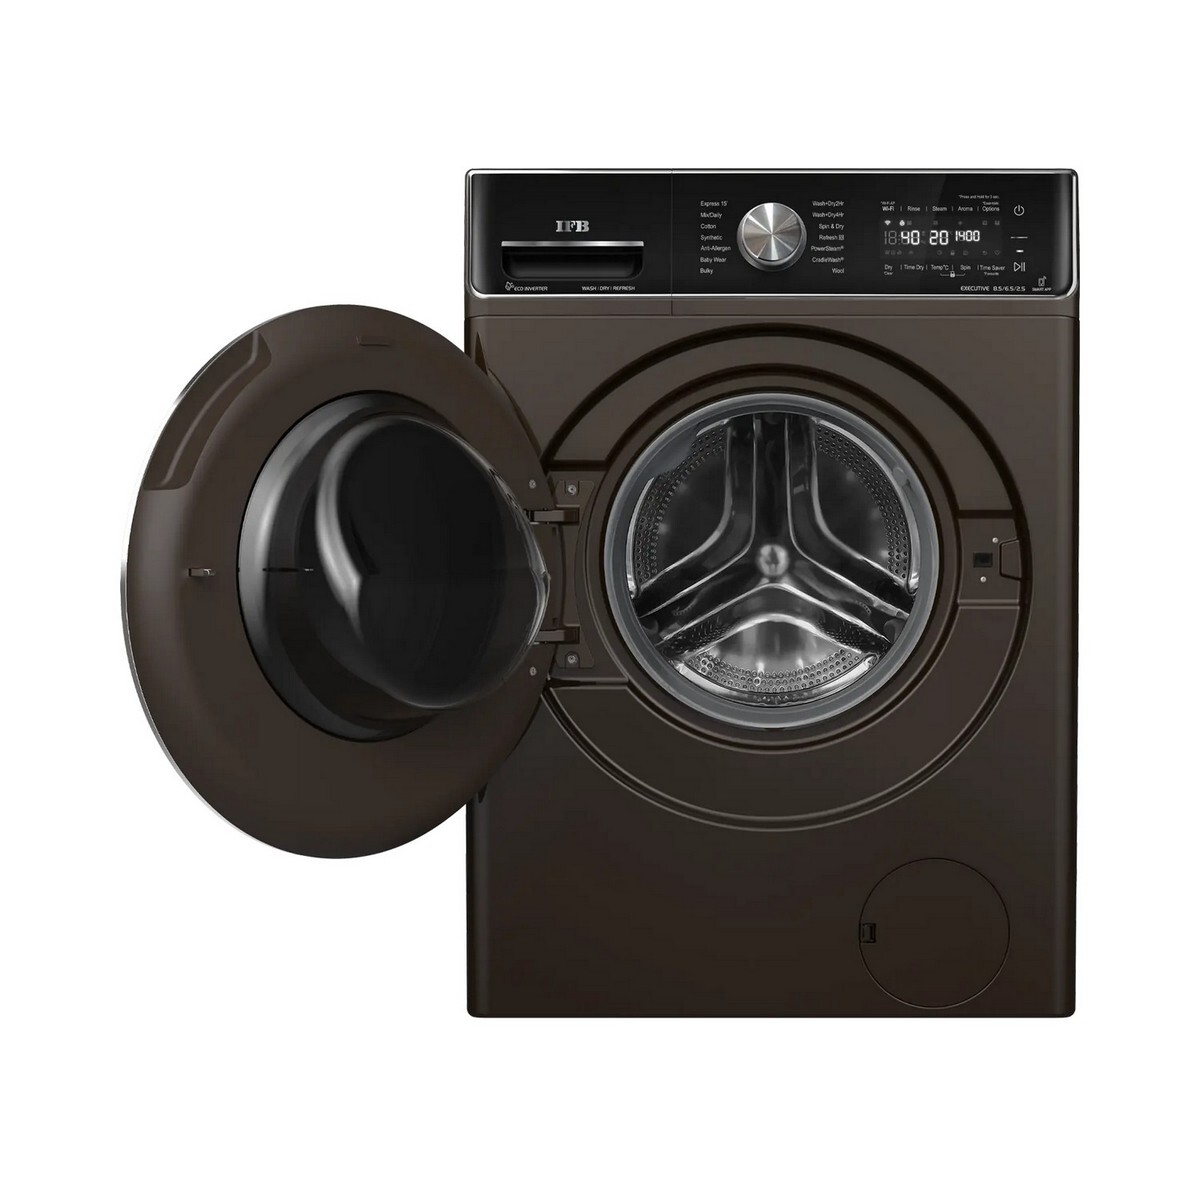 IFB Wash Dryer Refresher Executive ZXM 8.5Kg/6.5kg